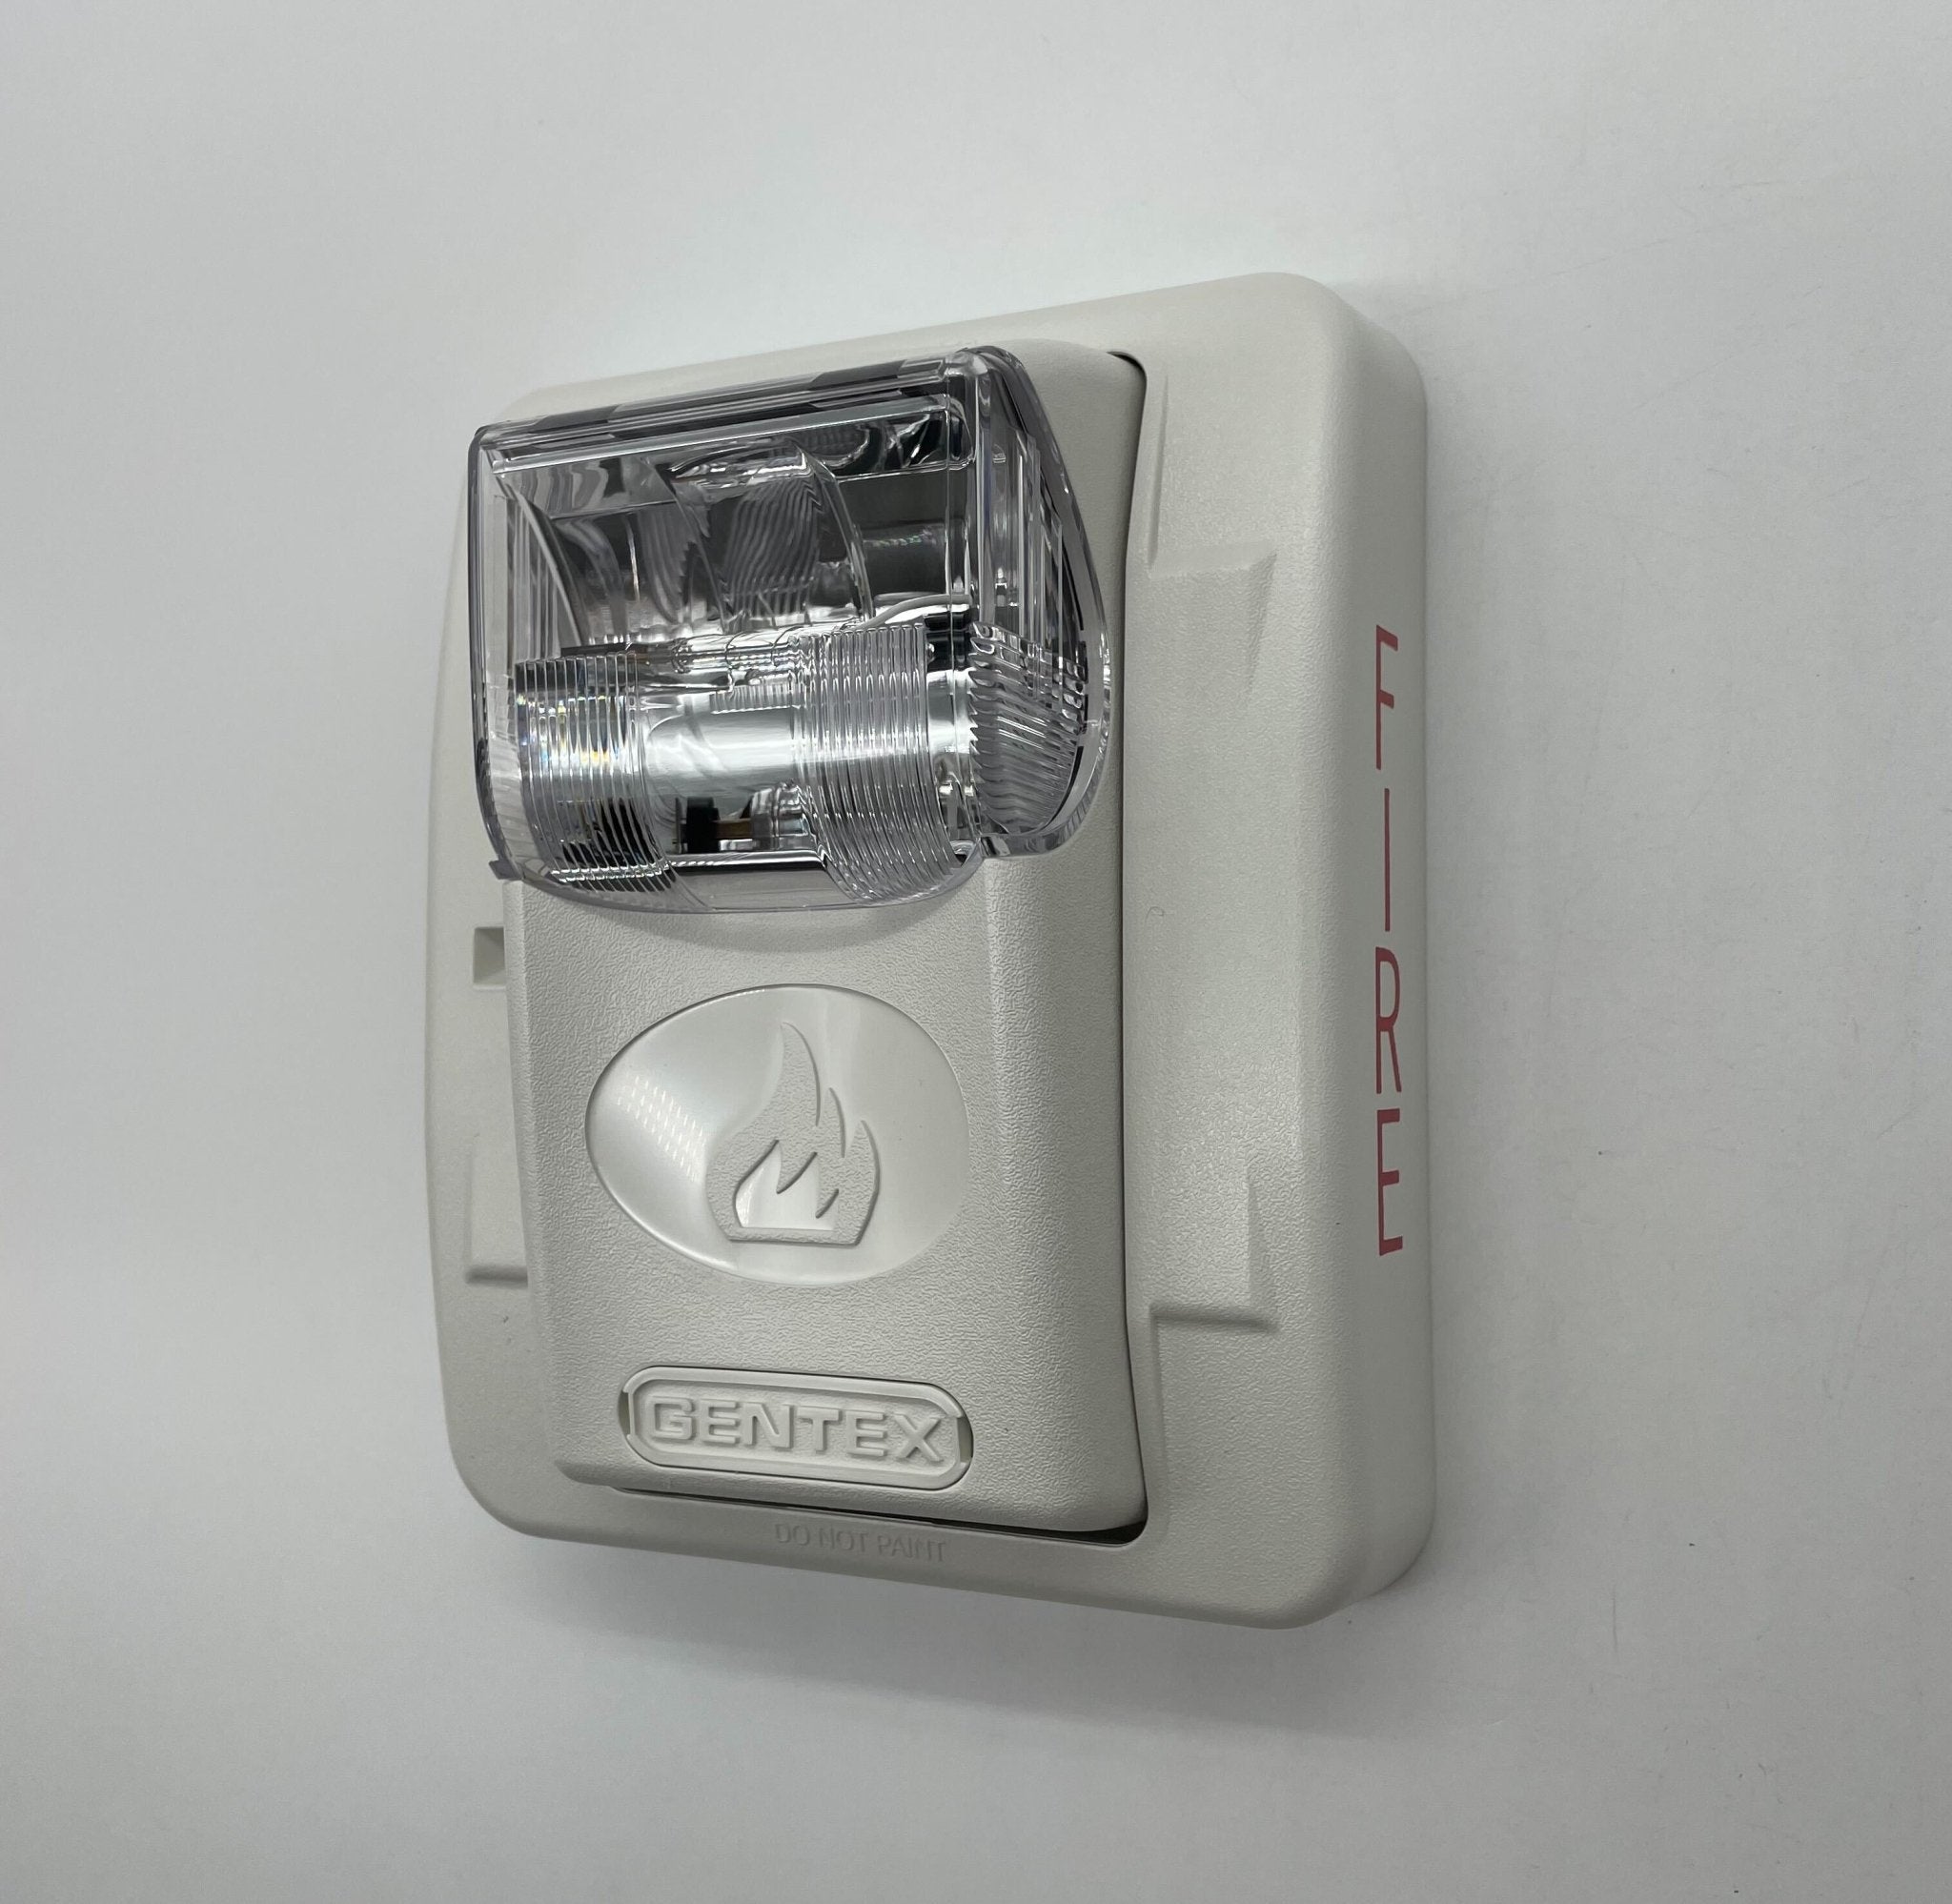 Gentex GES3-24WW - The Fire Alarm Supplier